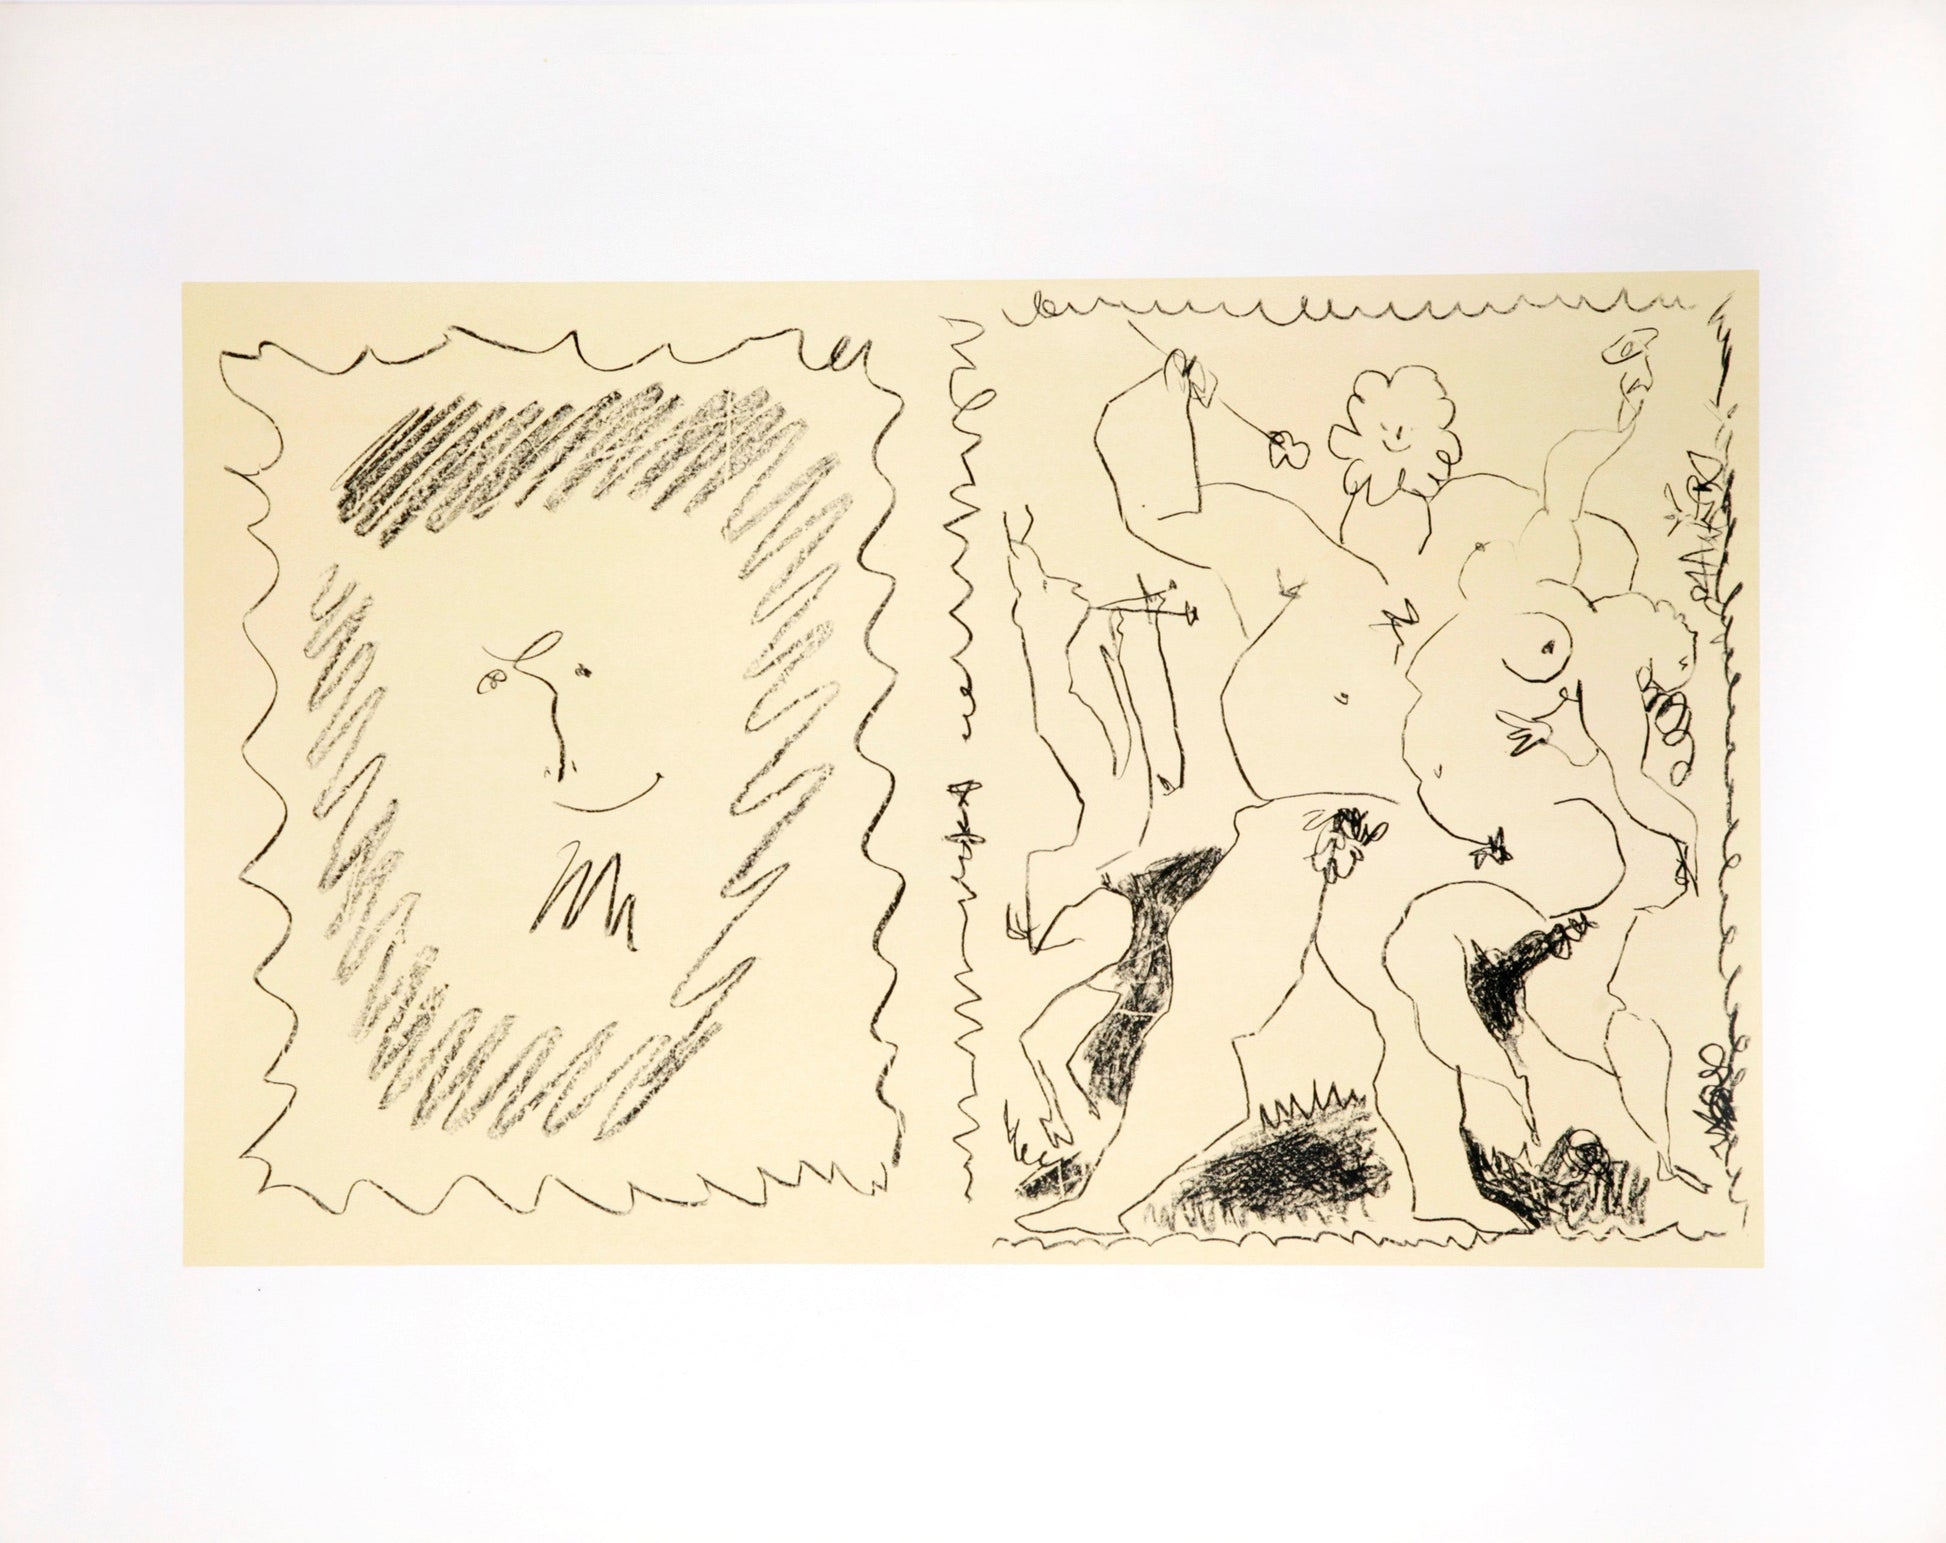 Bacchanal - Cover Mourlot III by Pablo Picasso, 1956 - Mourlot Editions - Fine_Art - Poster - Lithograph - Wall Art - Vintage - Prints - Original